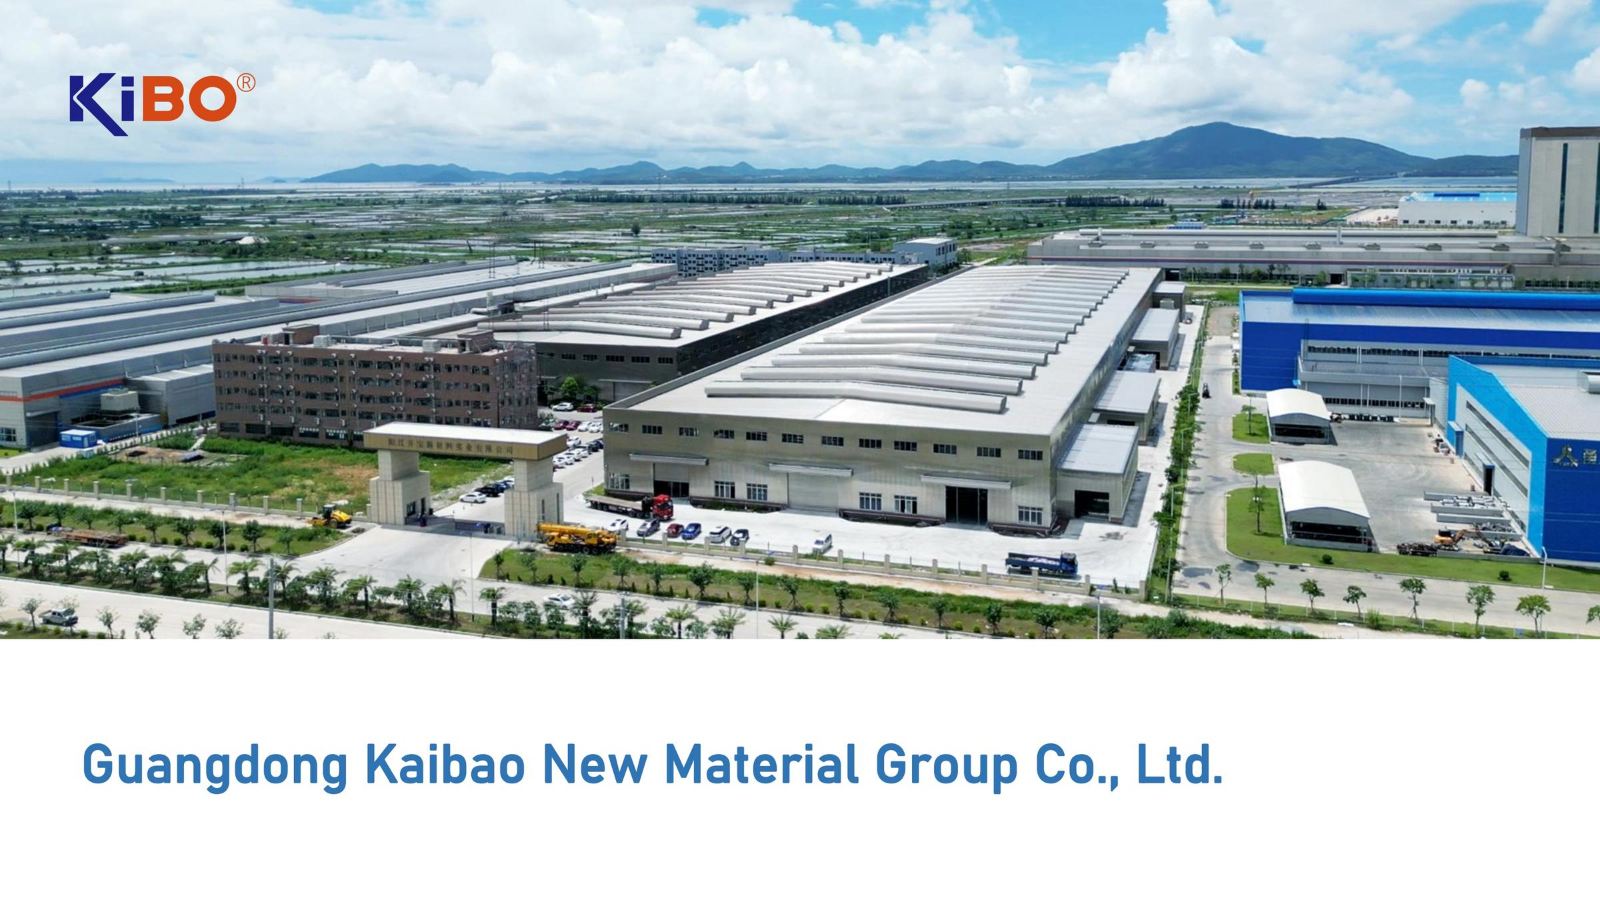 Introduction to Guangdong Kaibao Group Company